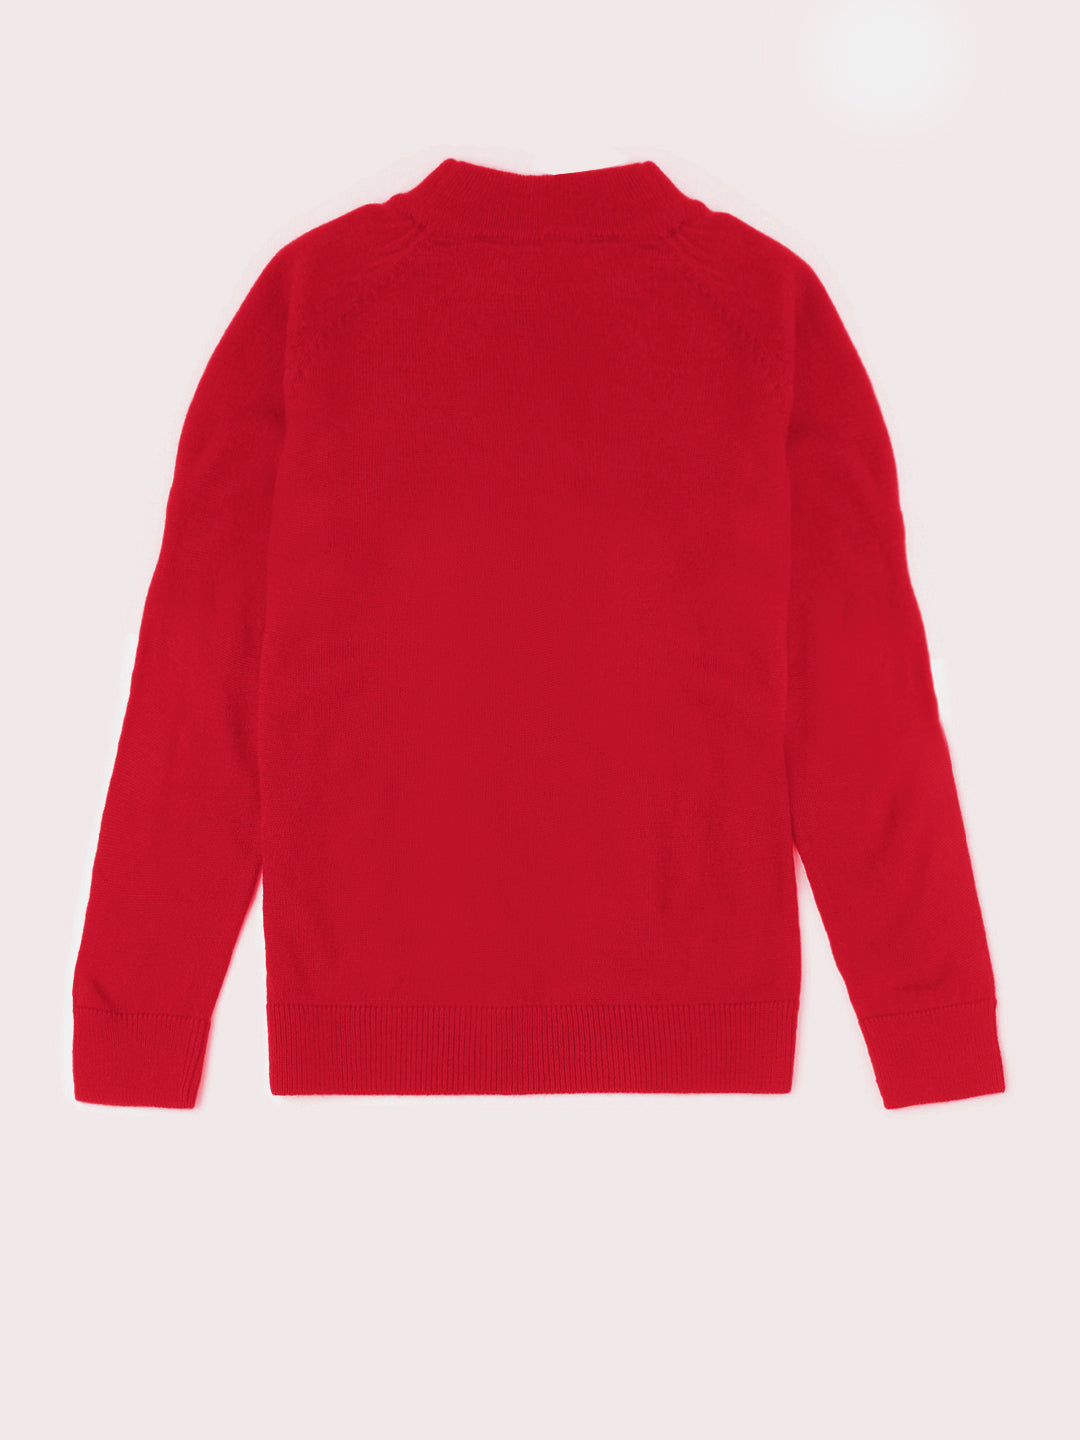 Kids - Boys Winter Sweatshirt Bright Red